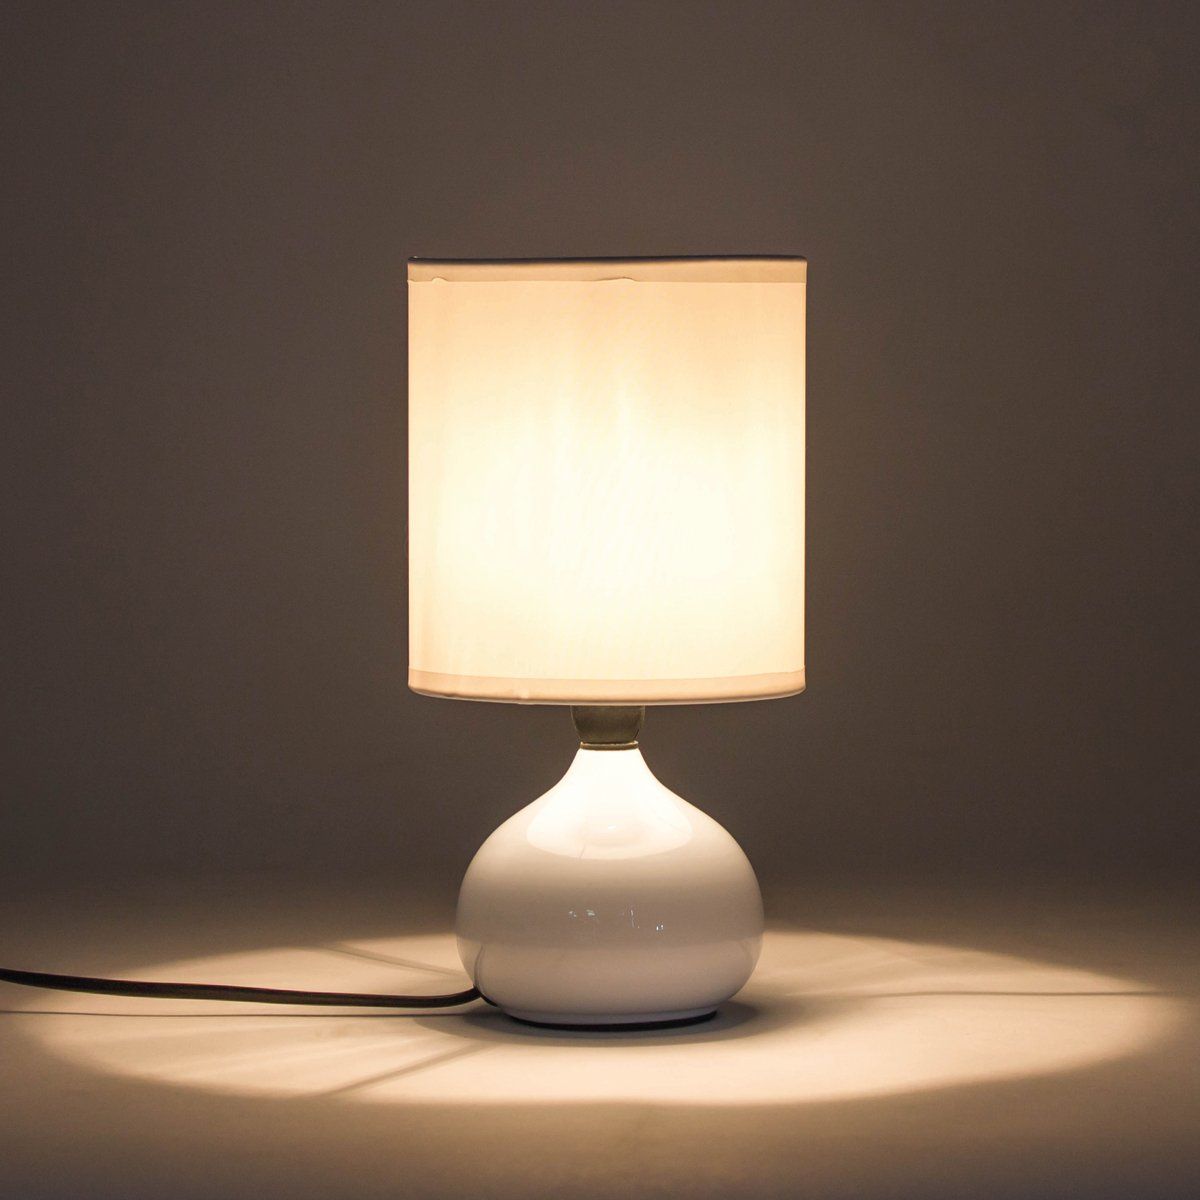 Lampe de table COAST blanche en céramique